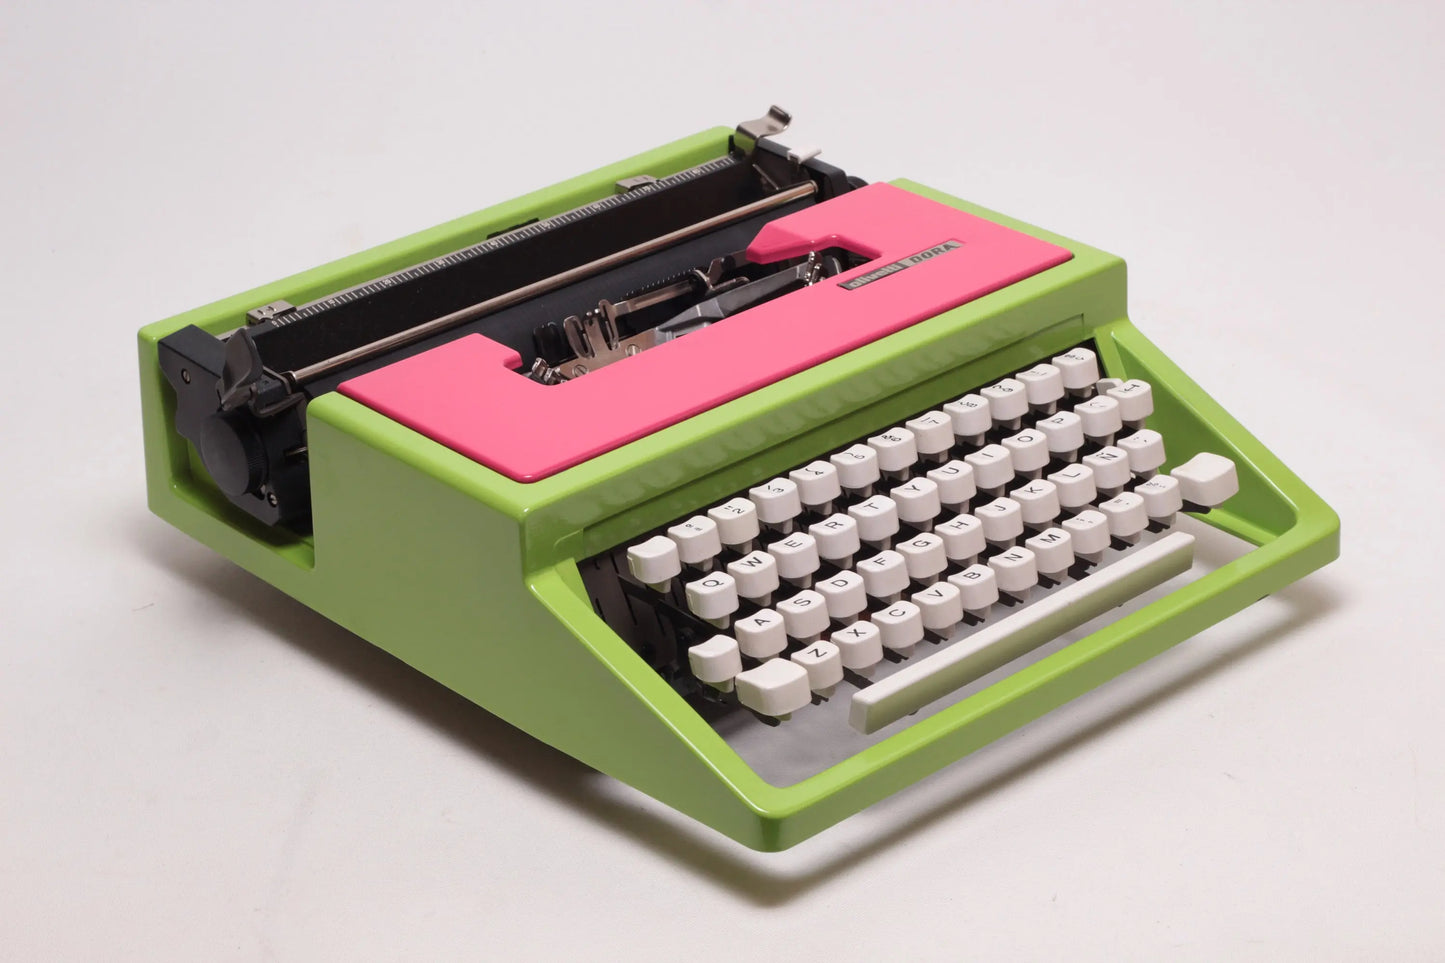 SALE! - Olivetti Dora/Lettera 31 Green & Pink Typewriter, Vintage, Mint Condition, Professionally Serviced - ElGranero Typewriter.Company